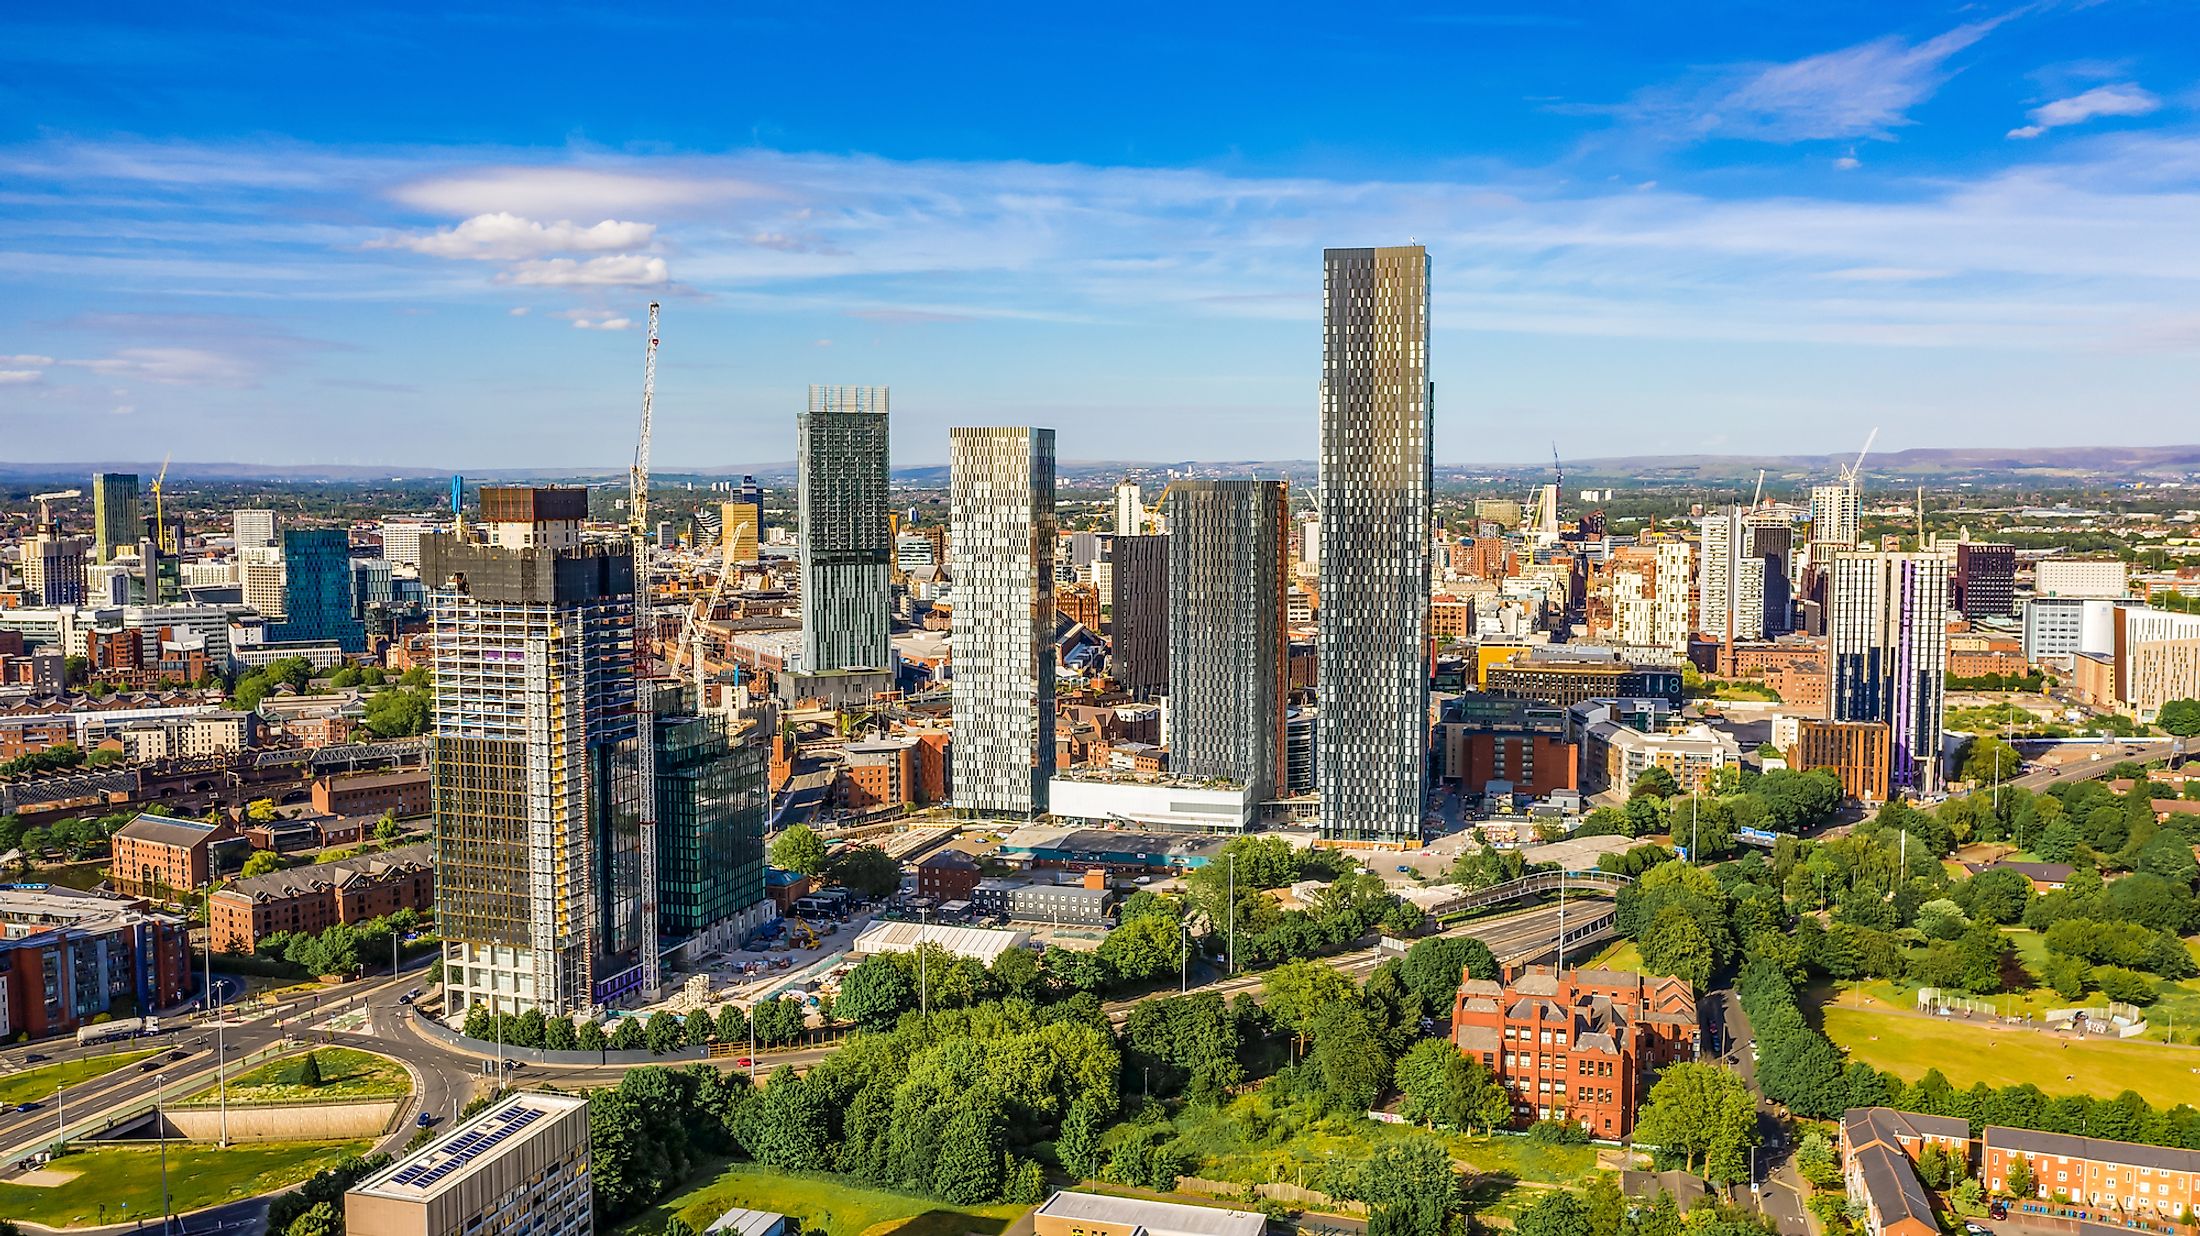 Aerial shot of Manchester, UK.